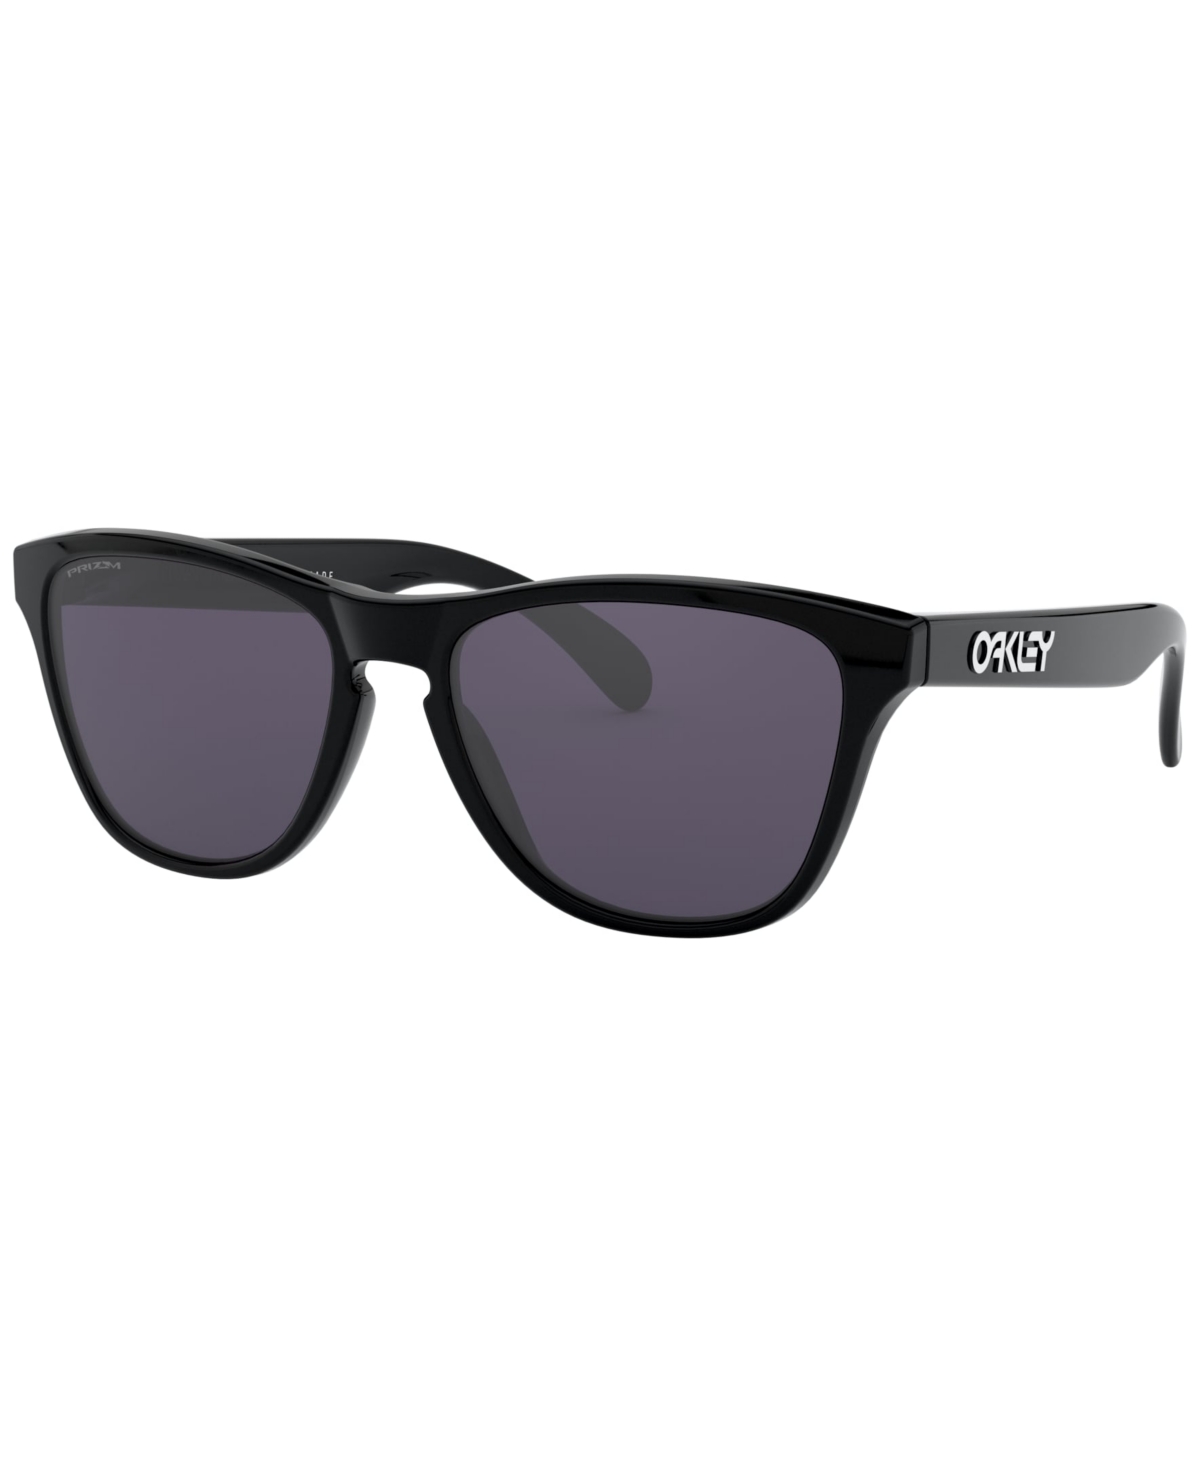 Oakley Jr Kids Sunglasses, Oj9006 Frogskins Xs (ages 11-17) In Polished Black